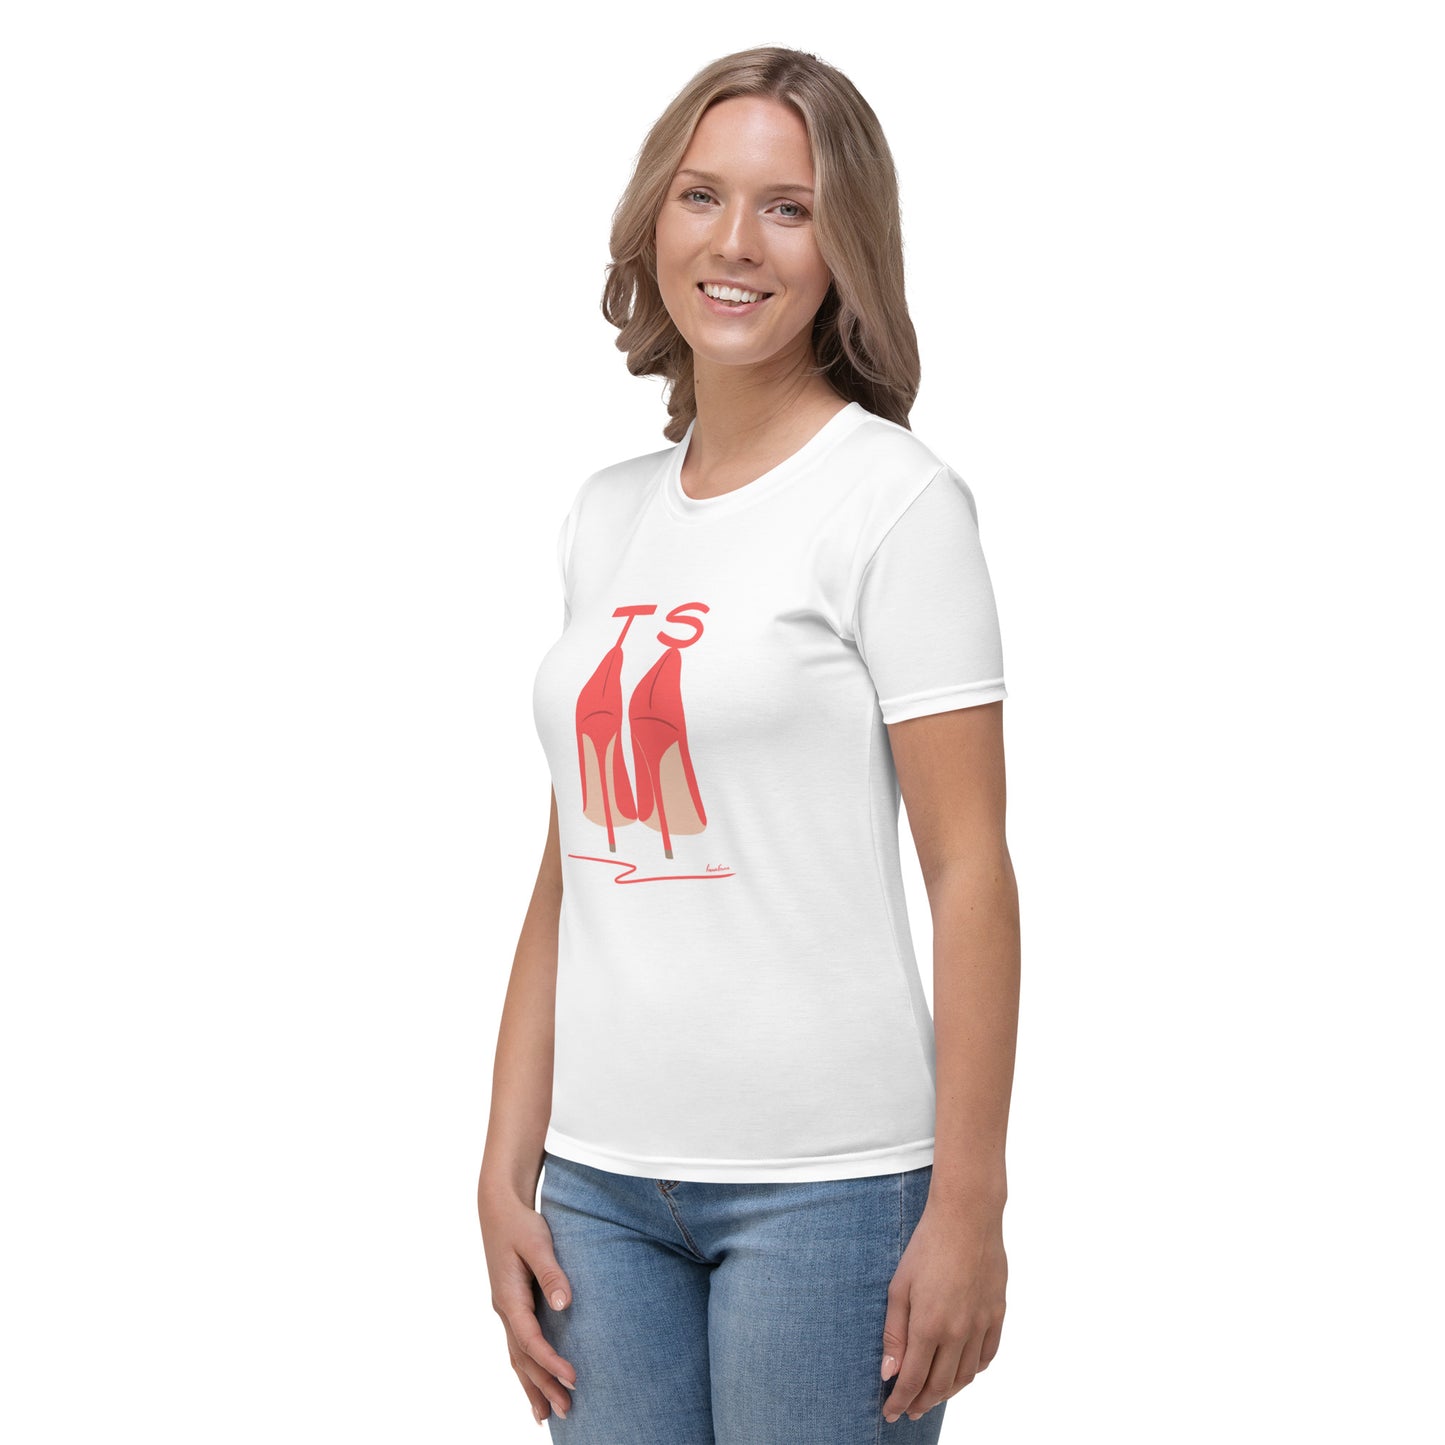 "Tacones Sabios" Women's T-Shirt (Wide Front)